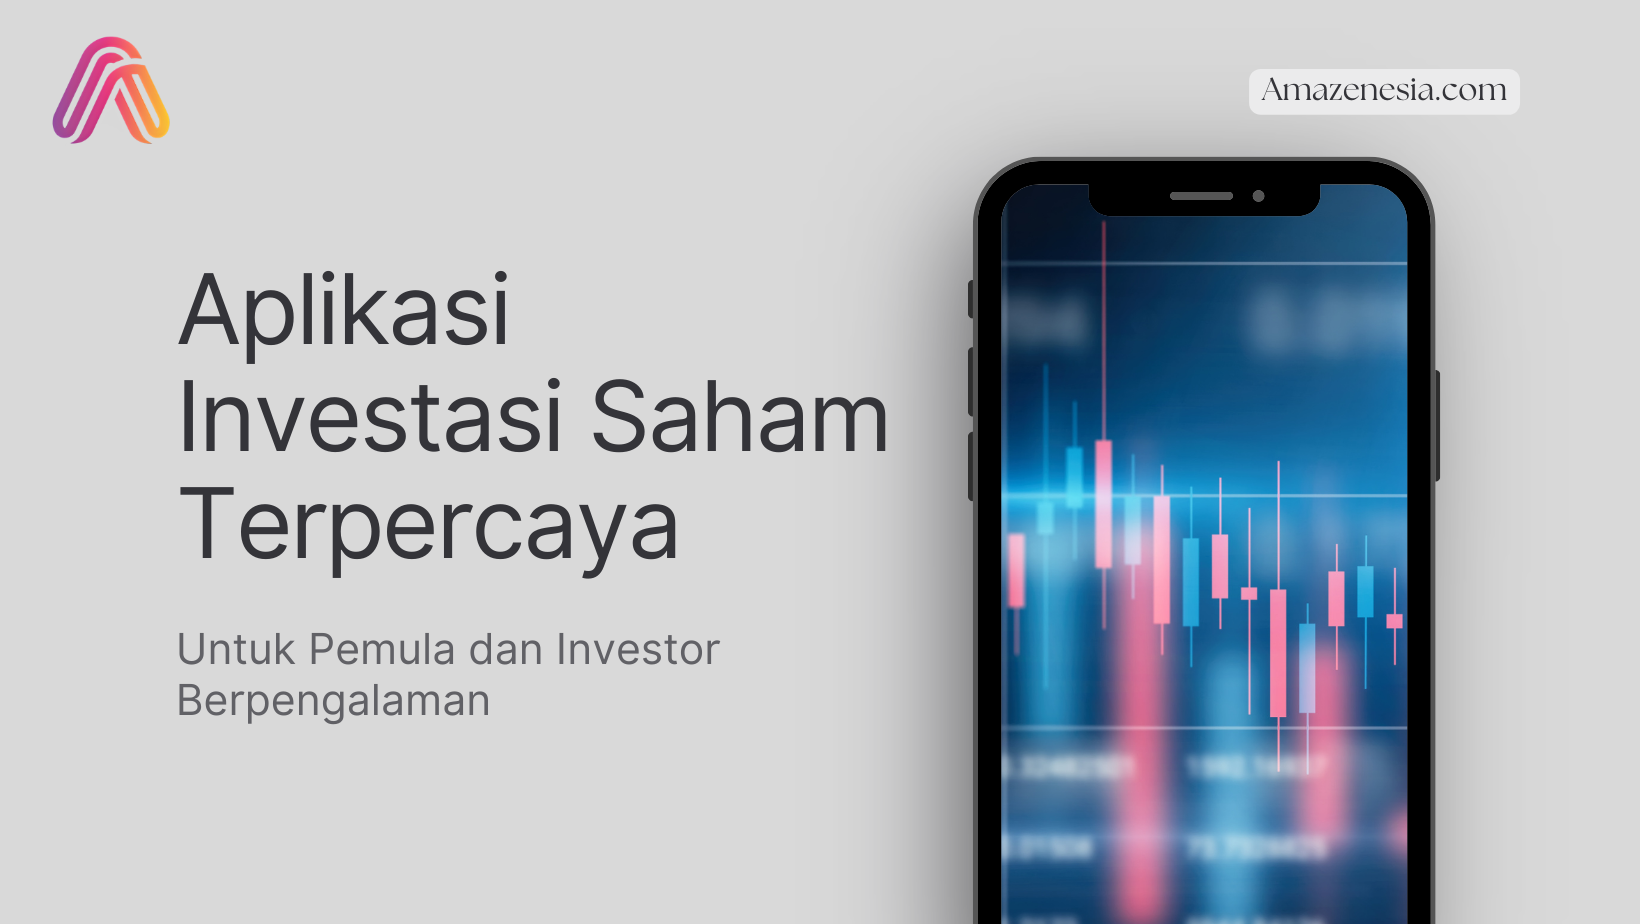 Aplikasi Investasi Saham Terpercaya untuk Pemula dan Investor Berpengalaman (Amazenesia)